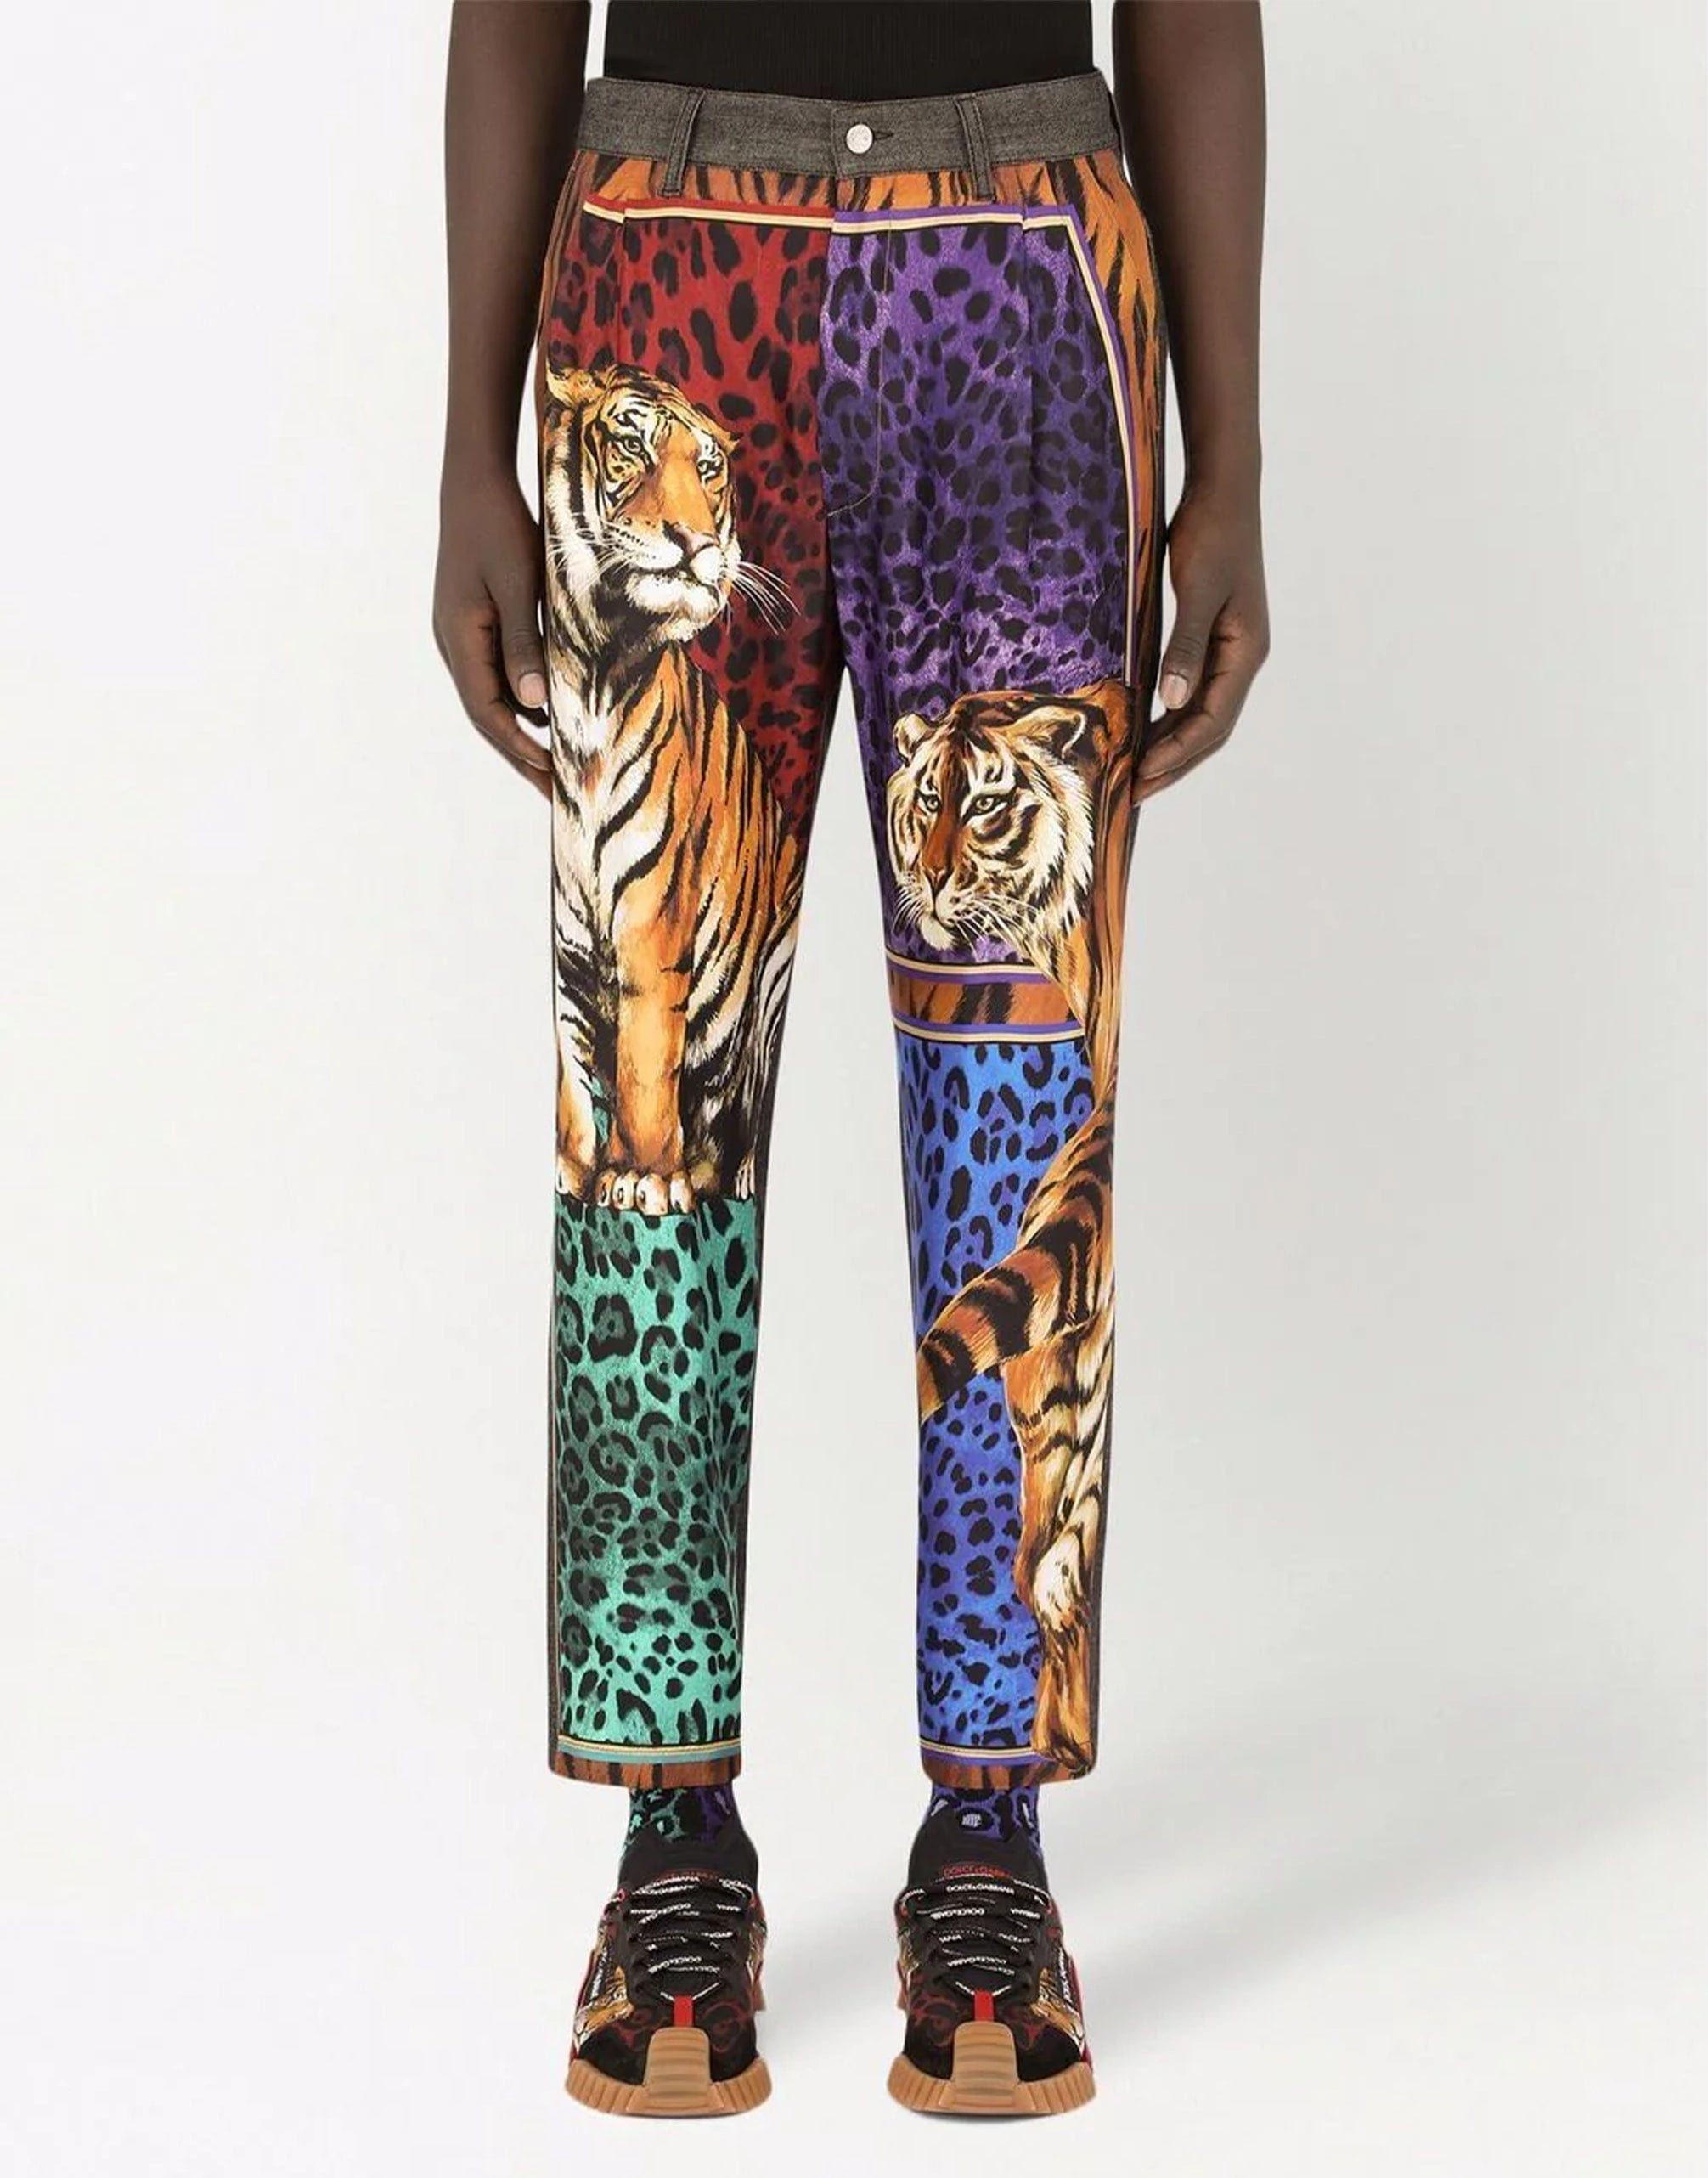 Tiger-Print Pants